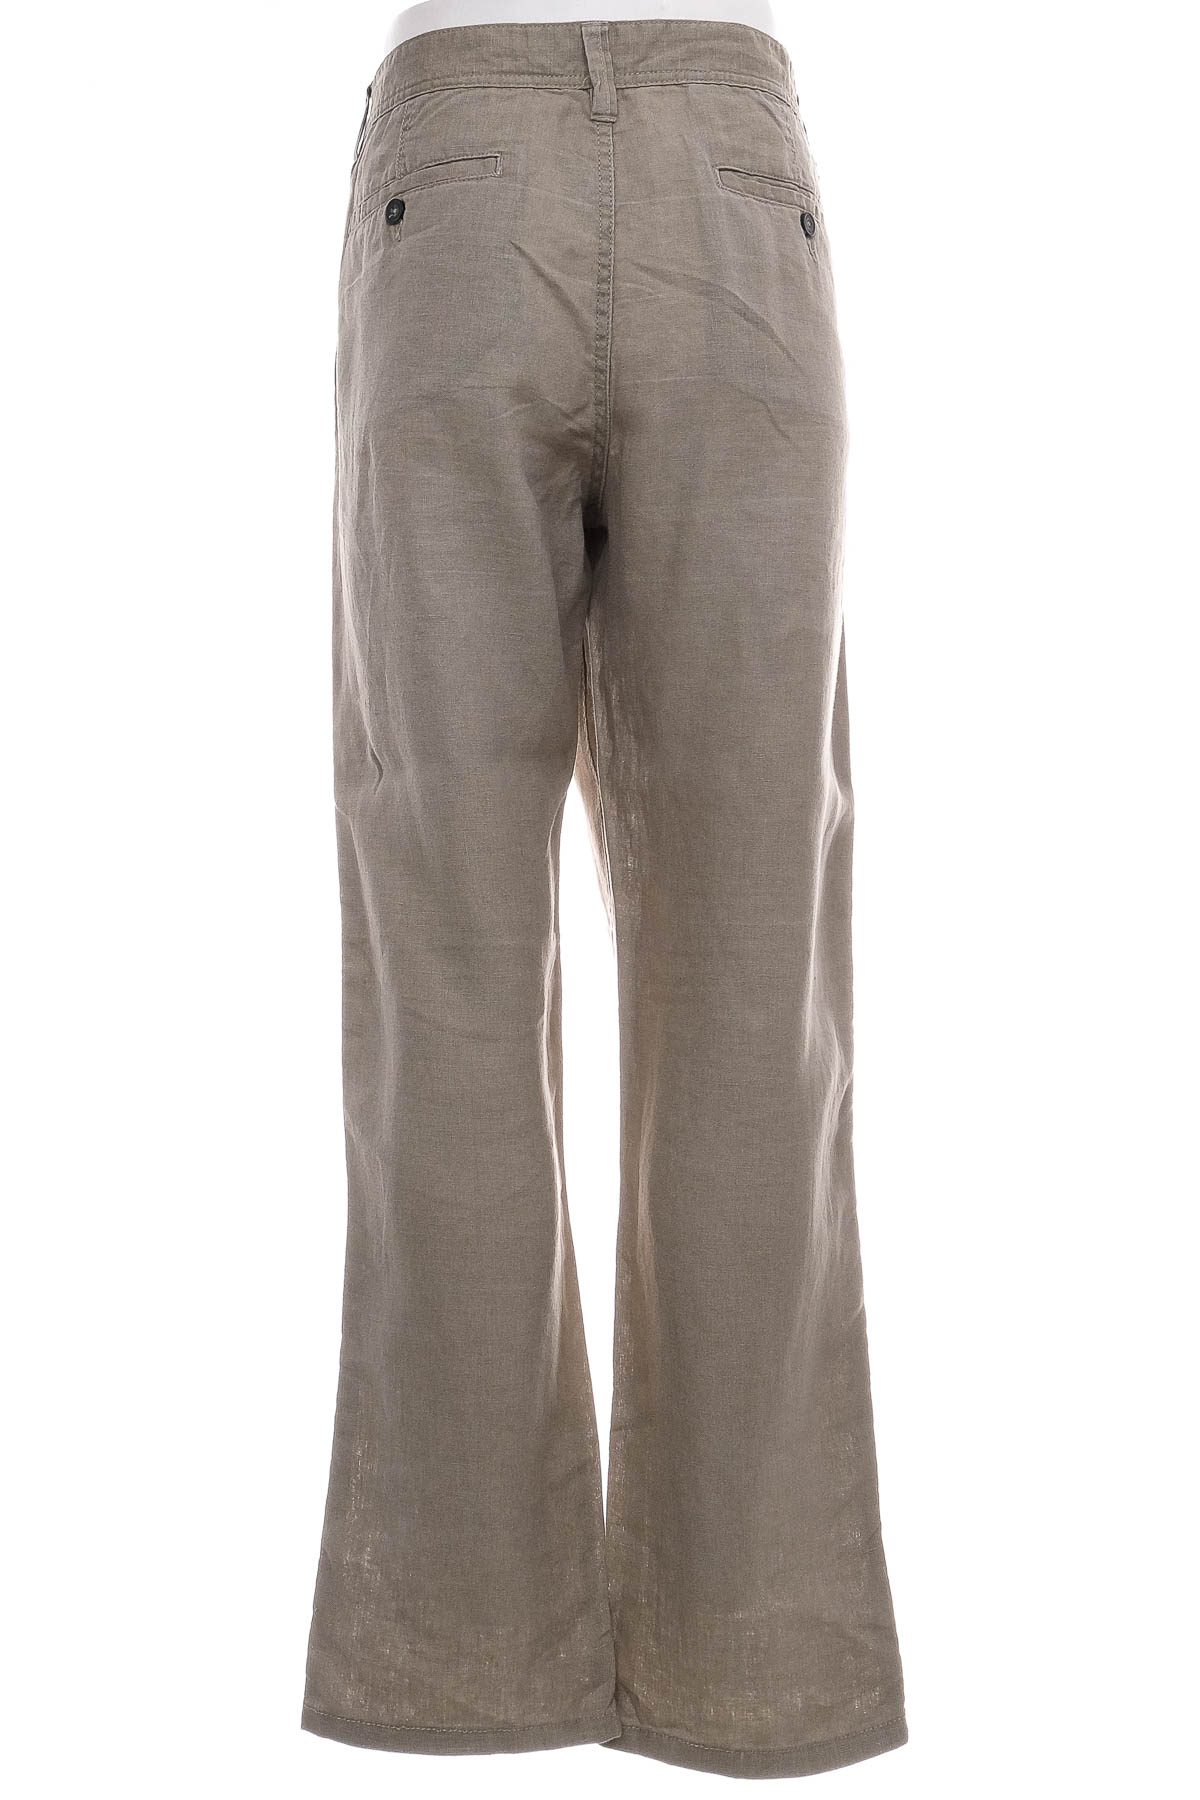 Men's trousers - CANDA - 1